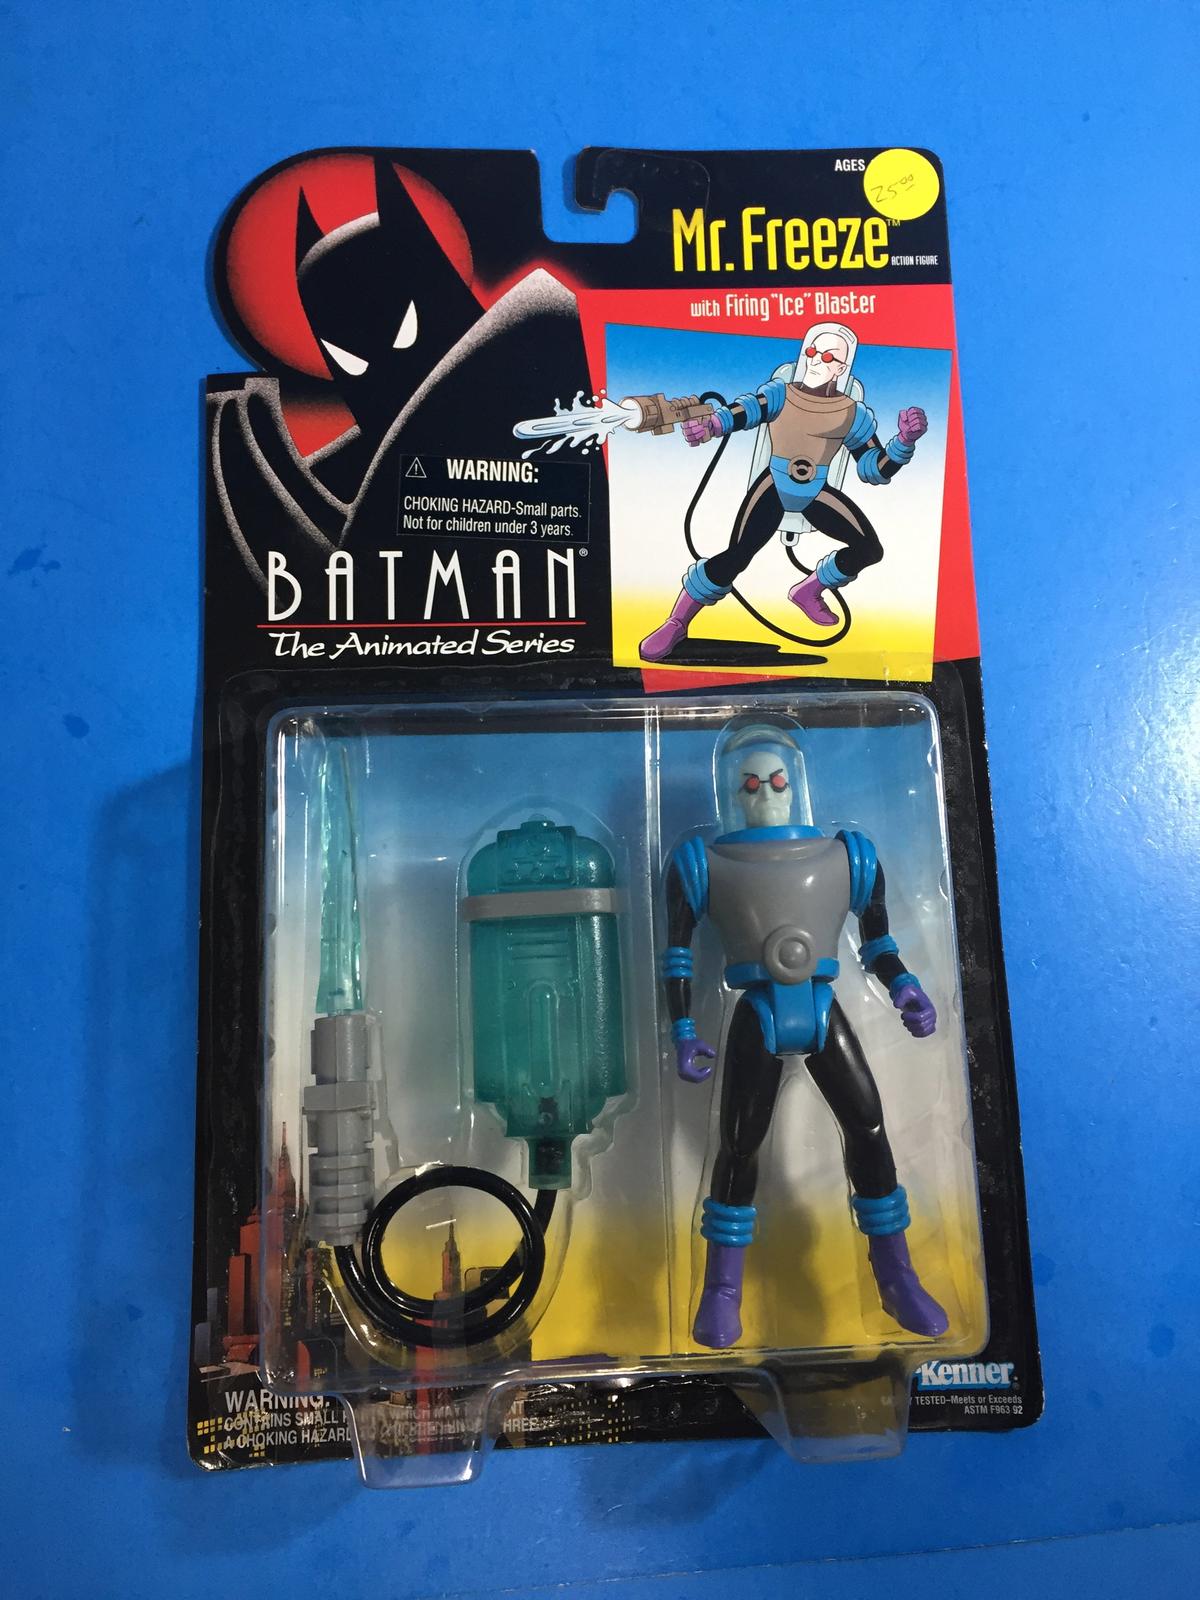 Batman The Animated Series NEW Action Figure - Mr. Freeze W/ Ice Blaster